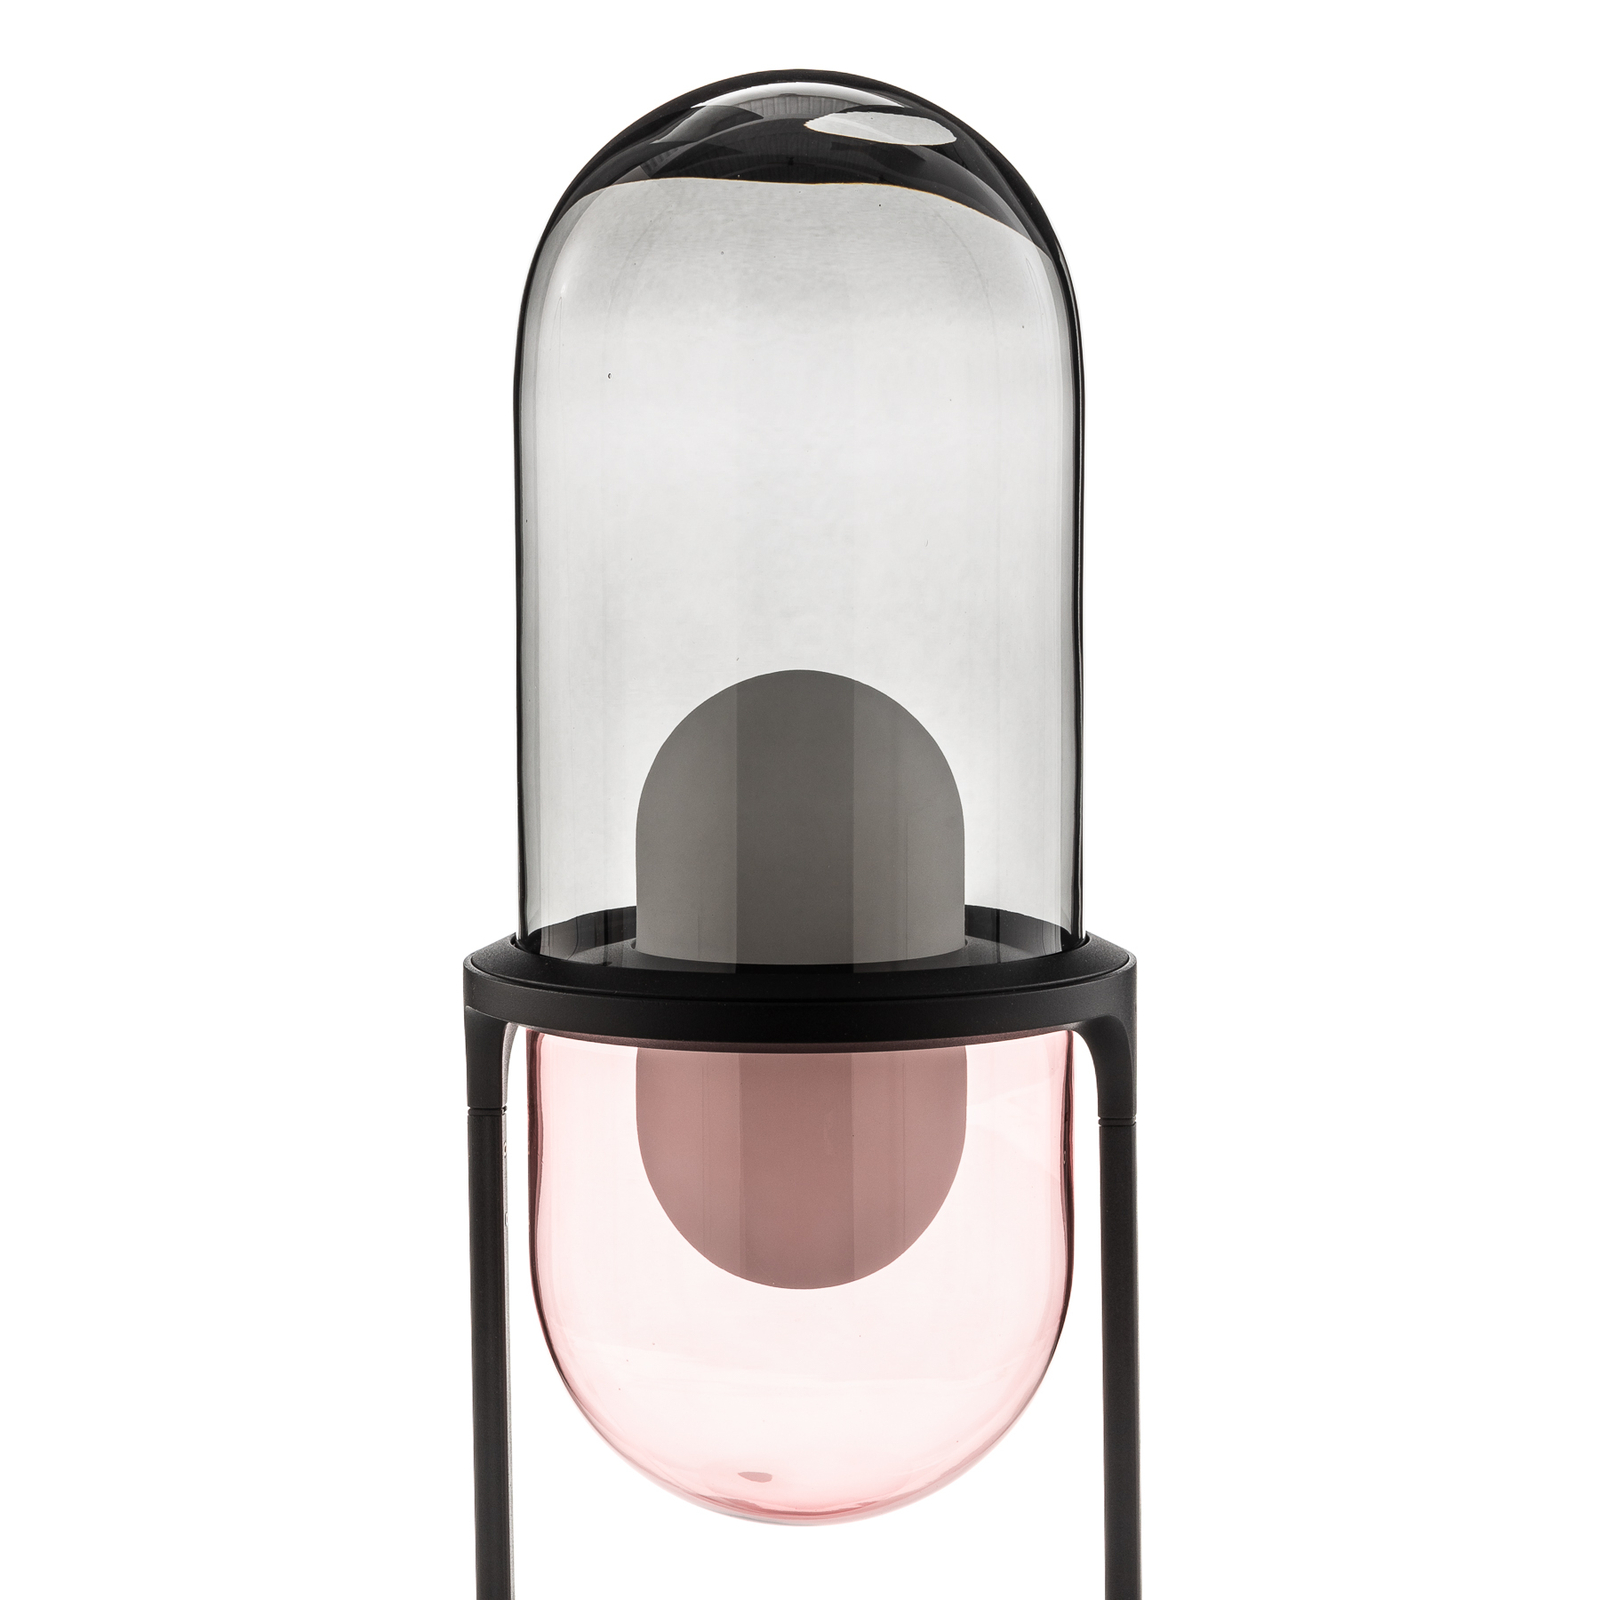 Pille lampe à poser LED grise/rose